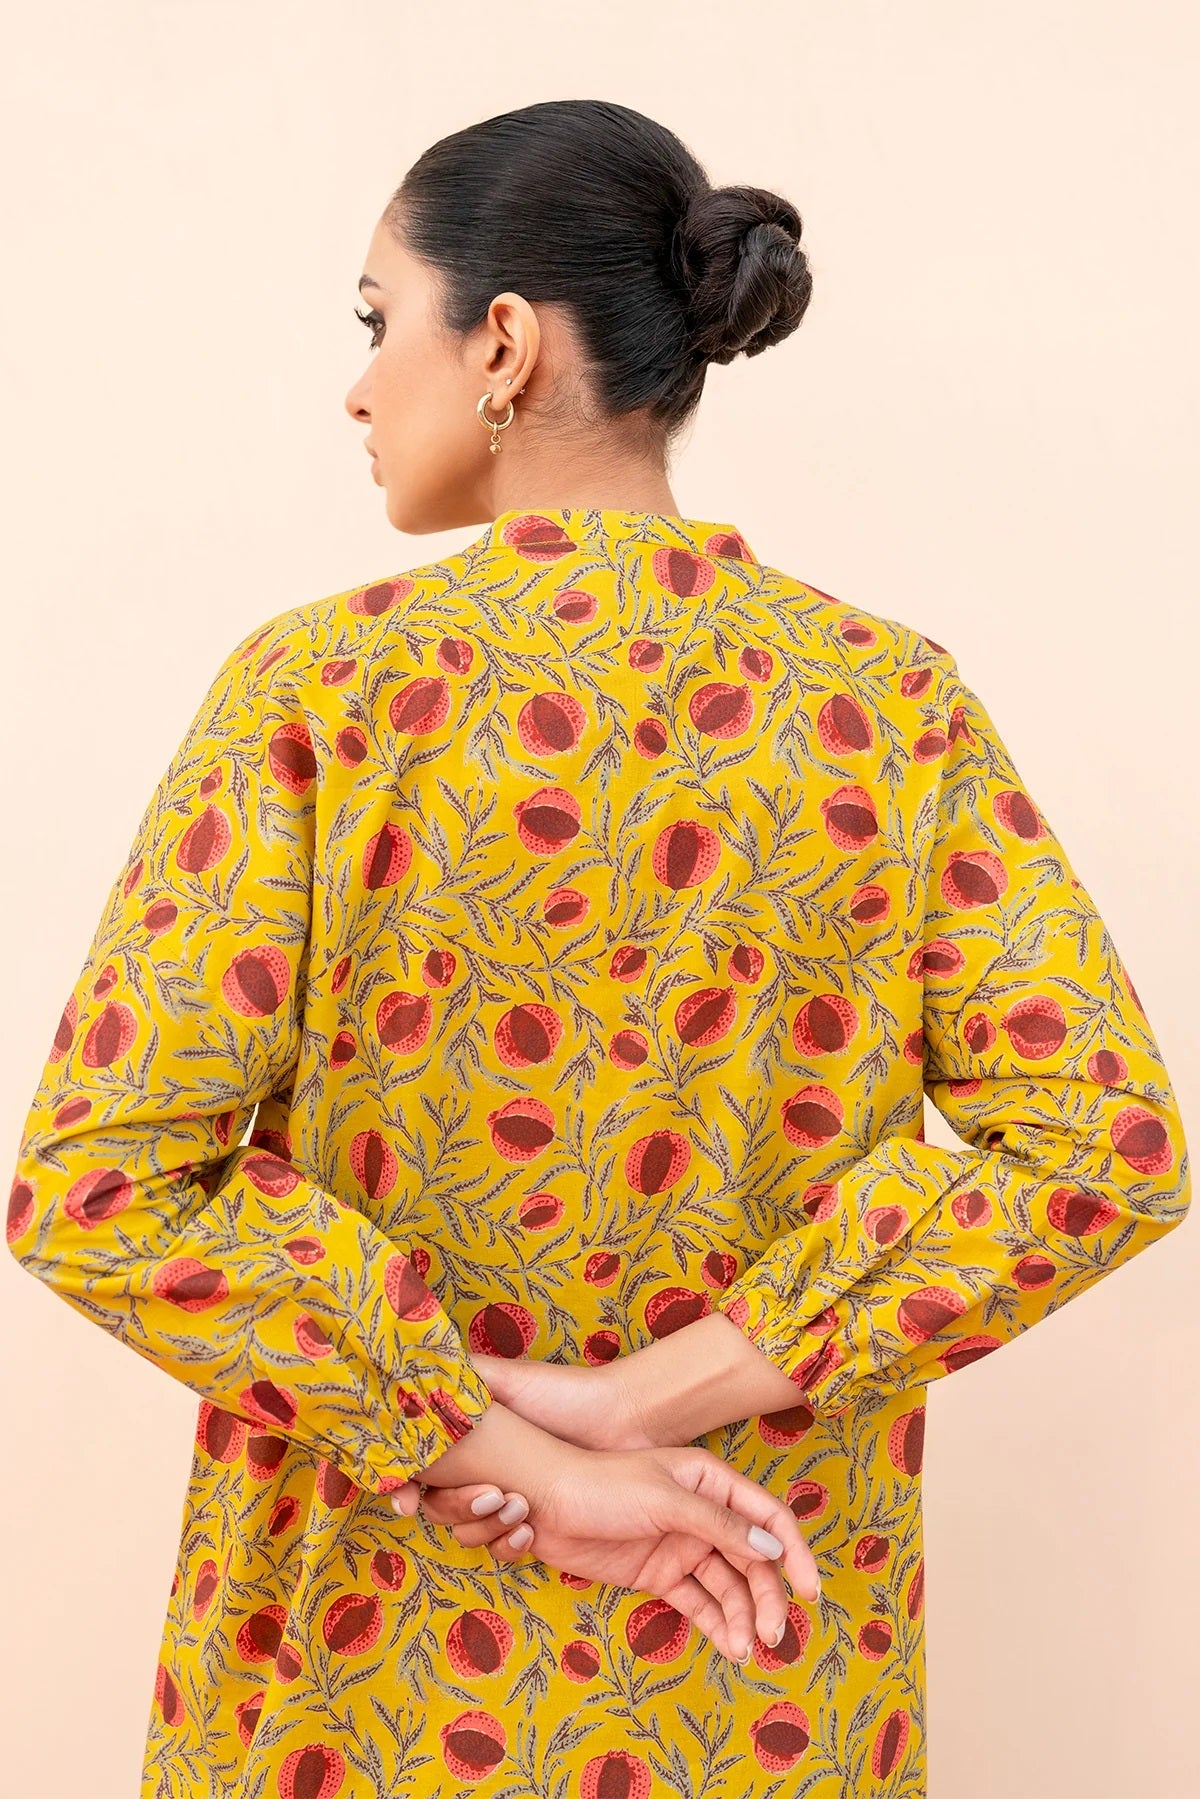 Sahar Digital Printed Lawn 2 piece Shirt & Trouser - SSL-V3-17